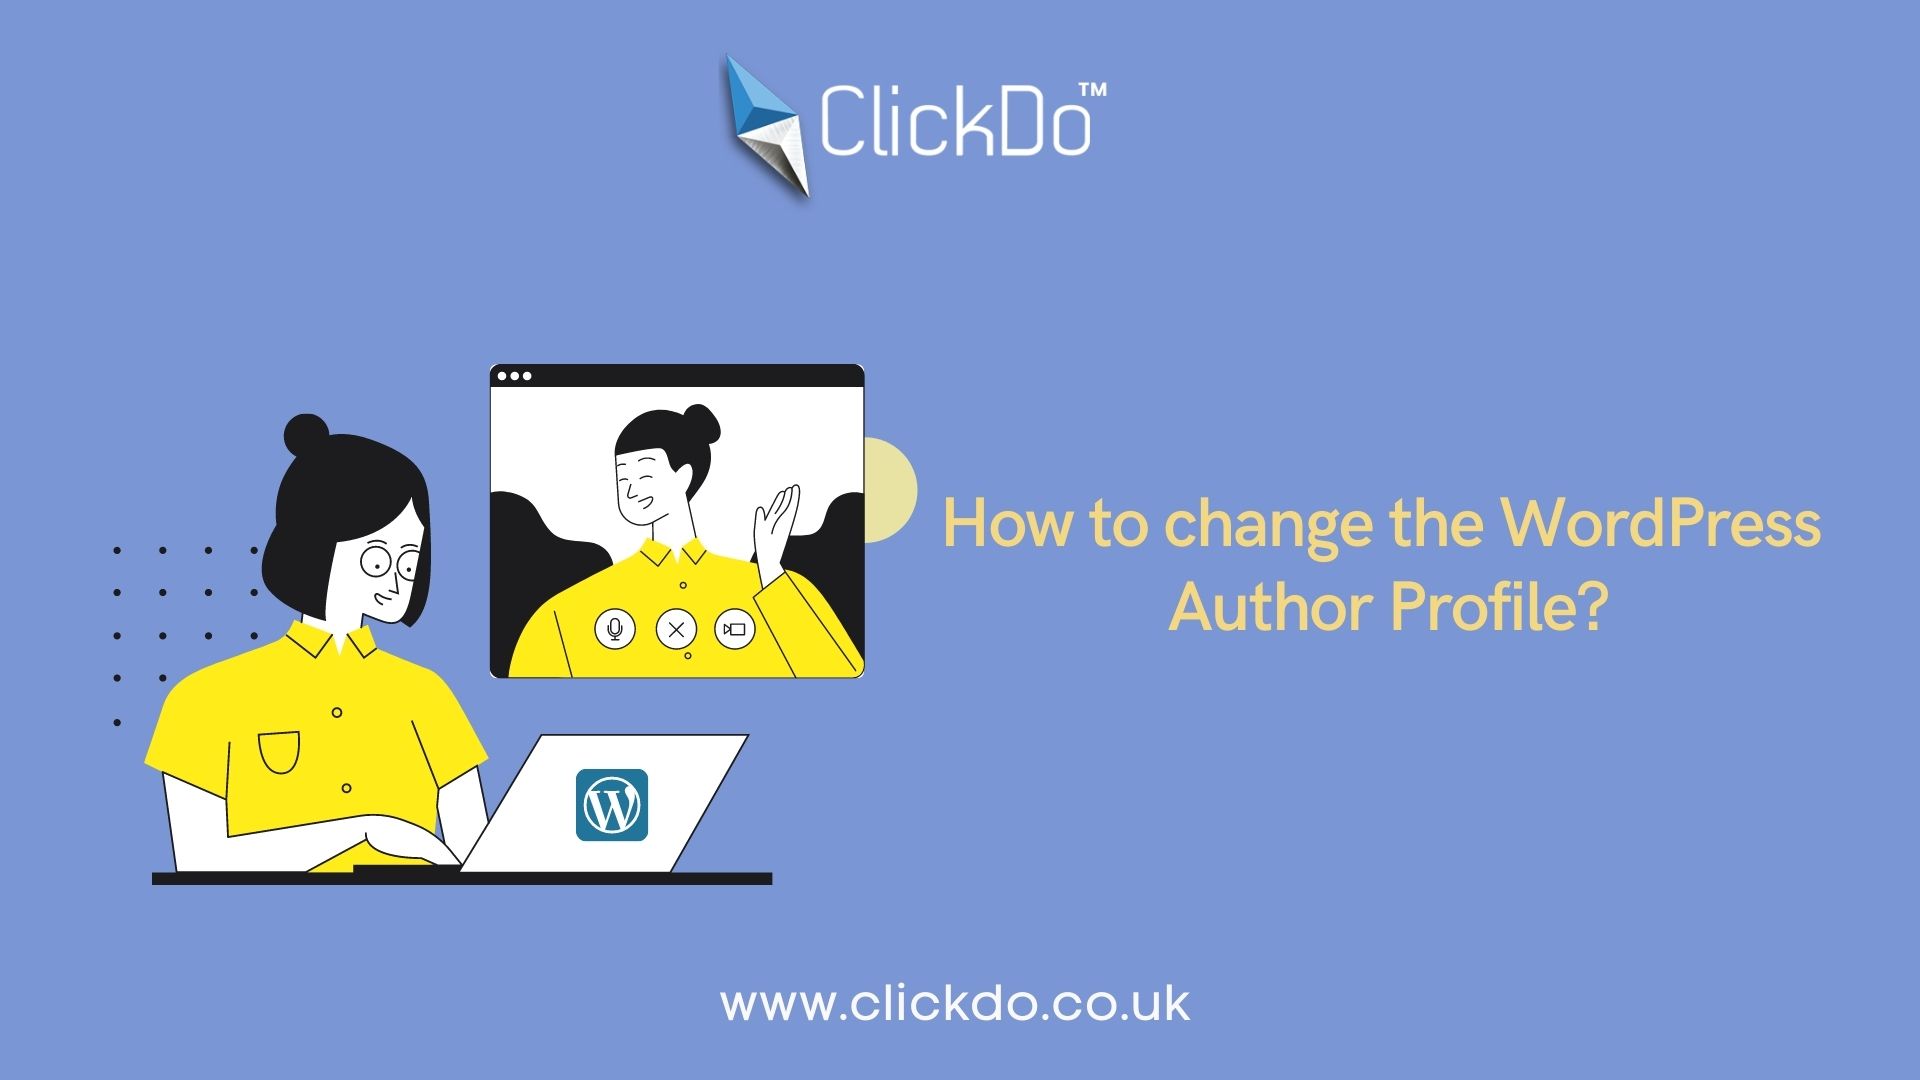 How to change the WordPress Author Profile